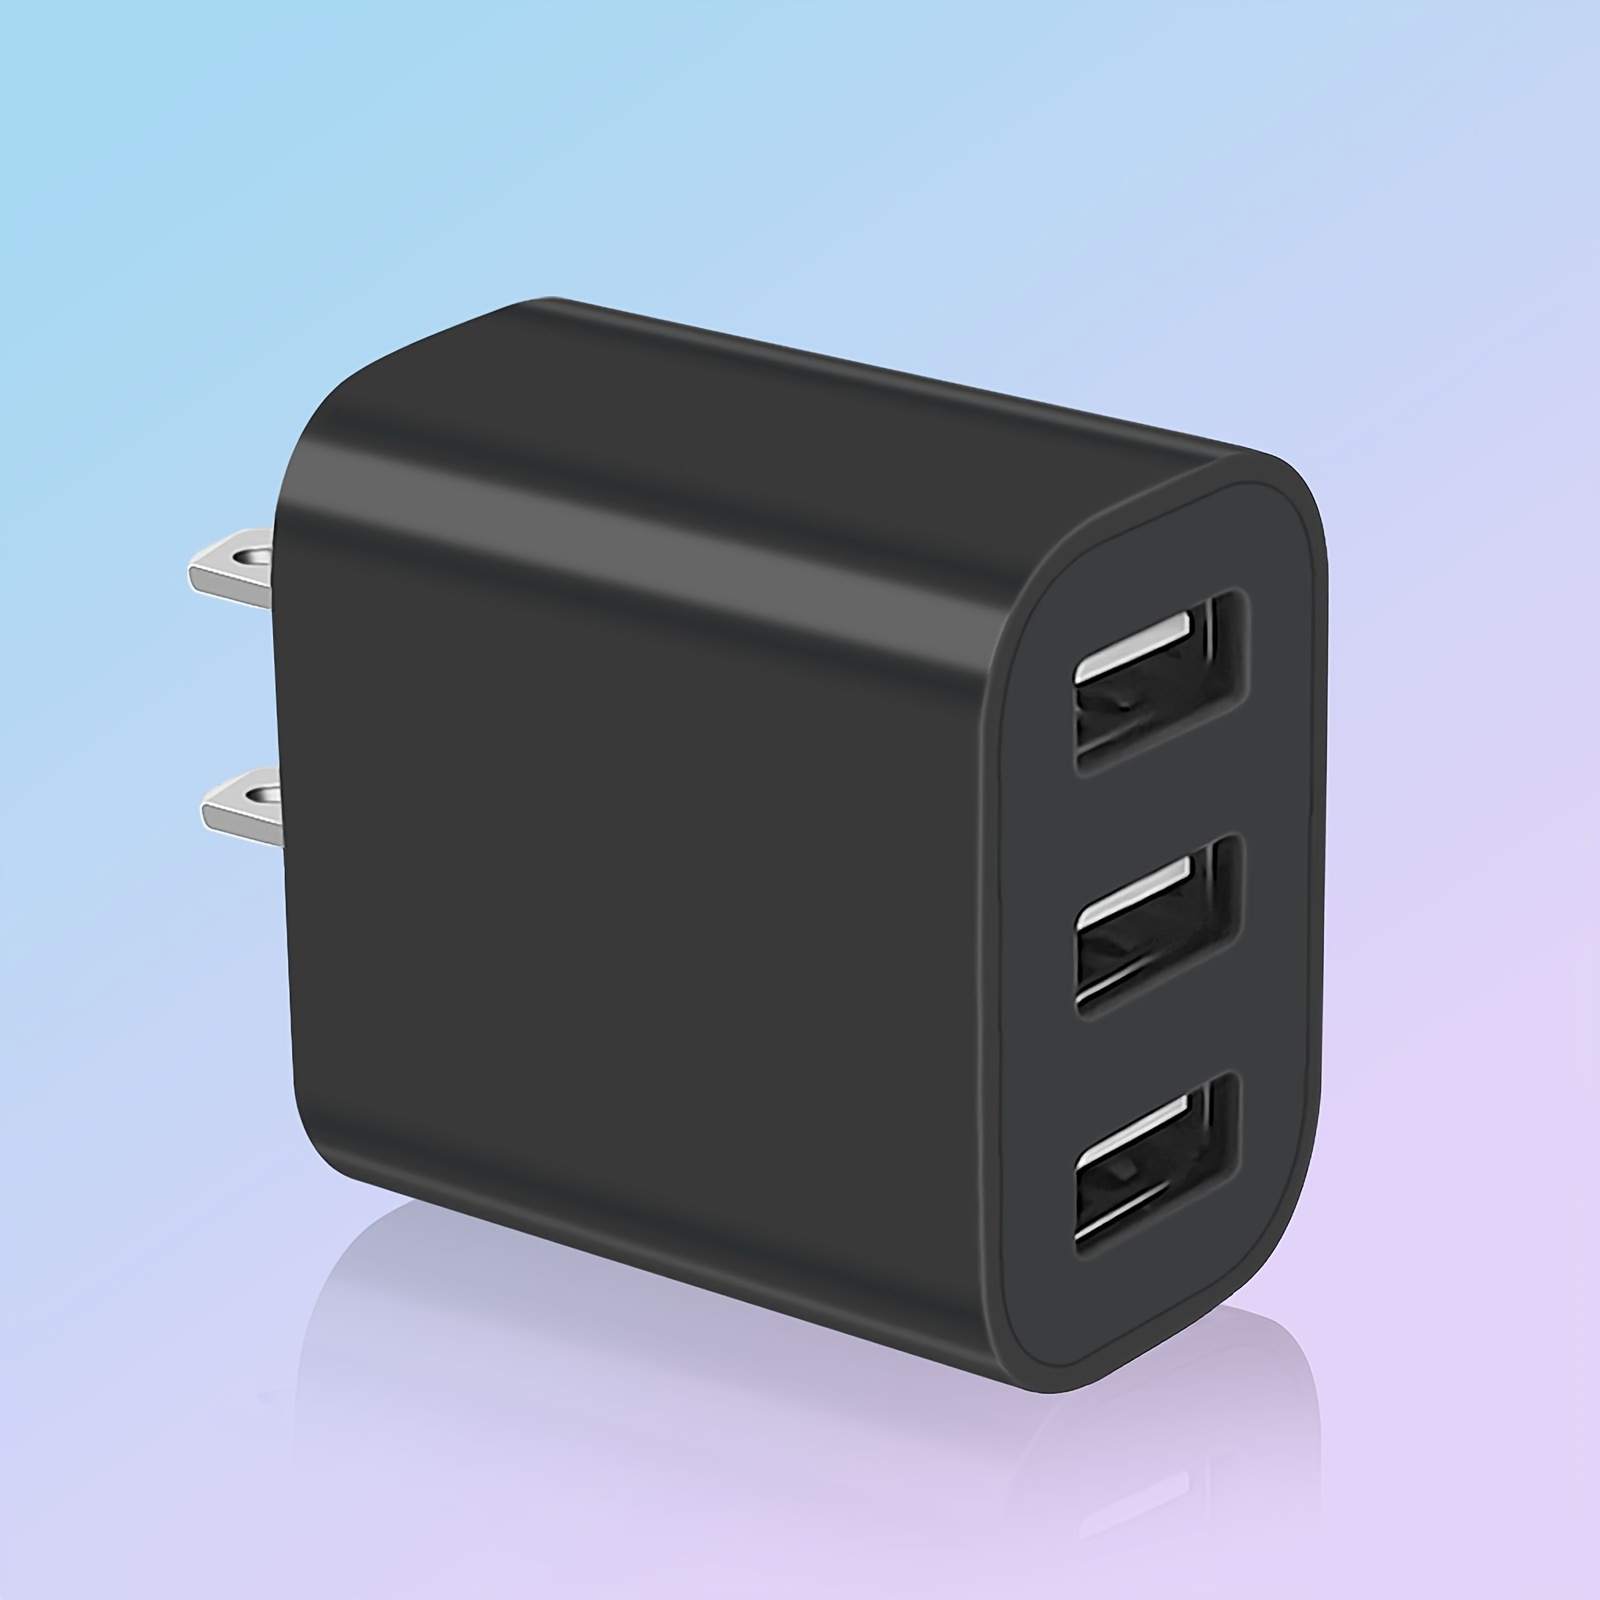  Enchufe USB, cargador de pared USB, paquete de 3 unidades,  GiGreen de doble puerto USB enchufe eléctrico cubo 5V 2.1A bloque de carga USB  enchufes compatibles iPhone 11 XS X 8